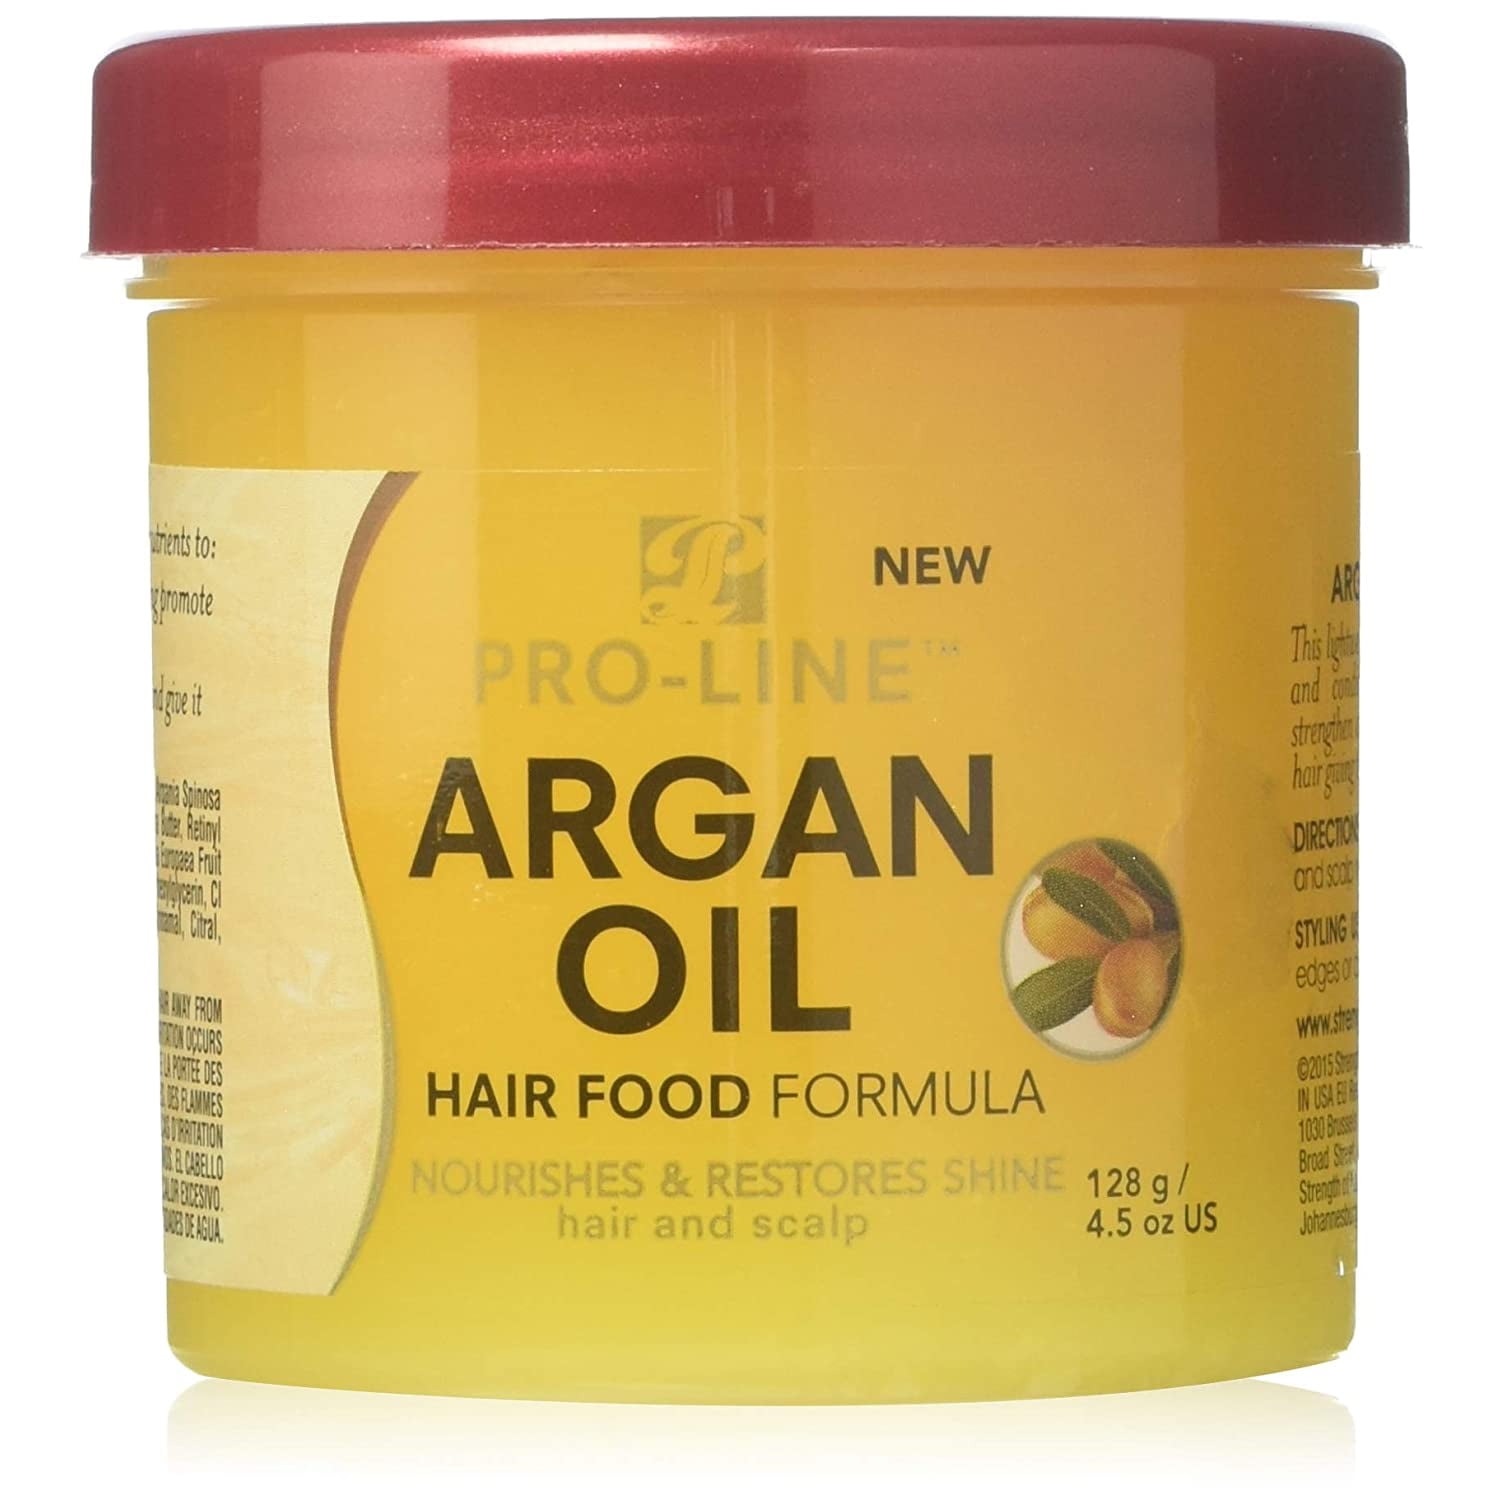 Pro Line Hair Food Argan Oil 40021587 89004 4.5oz,Pack of 12 - Walmart.com